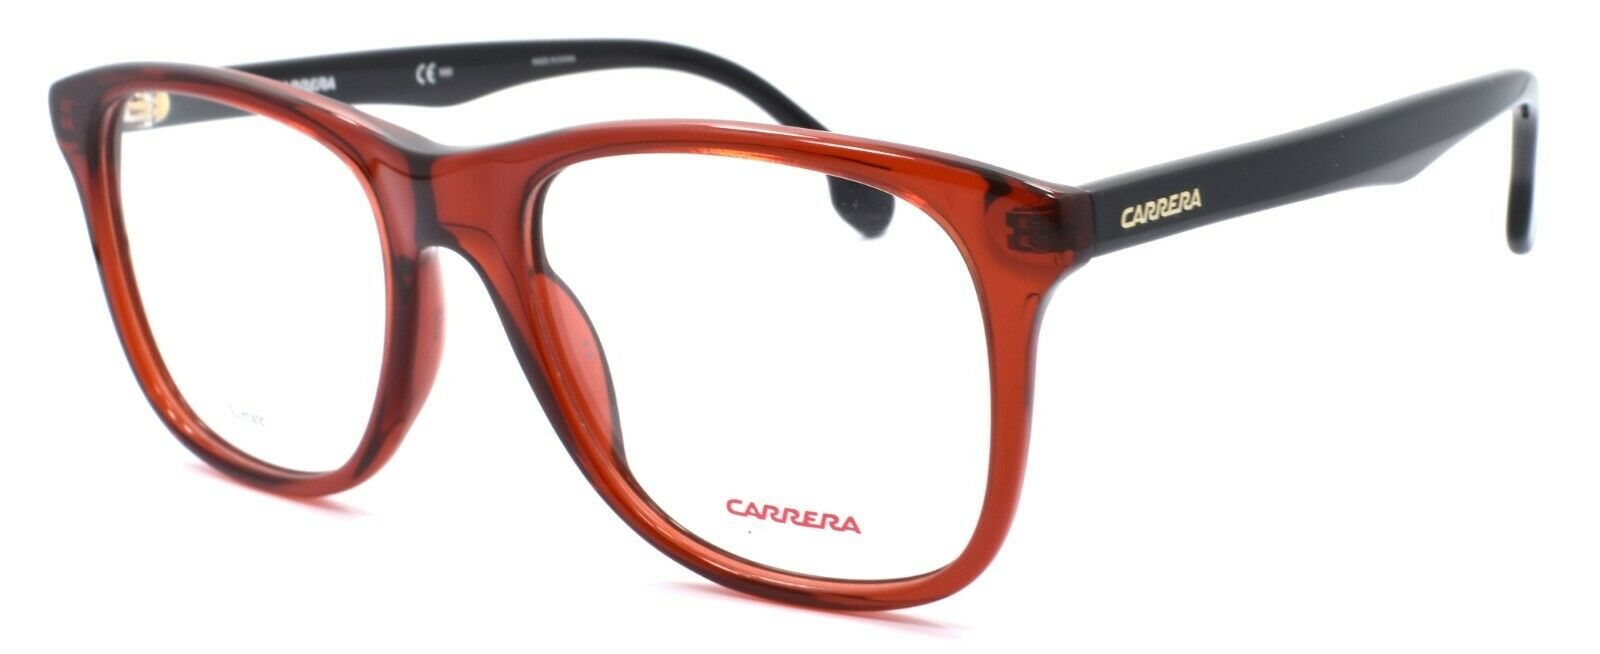 1-Carrera 135/V LGD Men's Eyeglasses Frames 52-19-145 Burgundy / Black + CASE-762753597274-IKSpecs